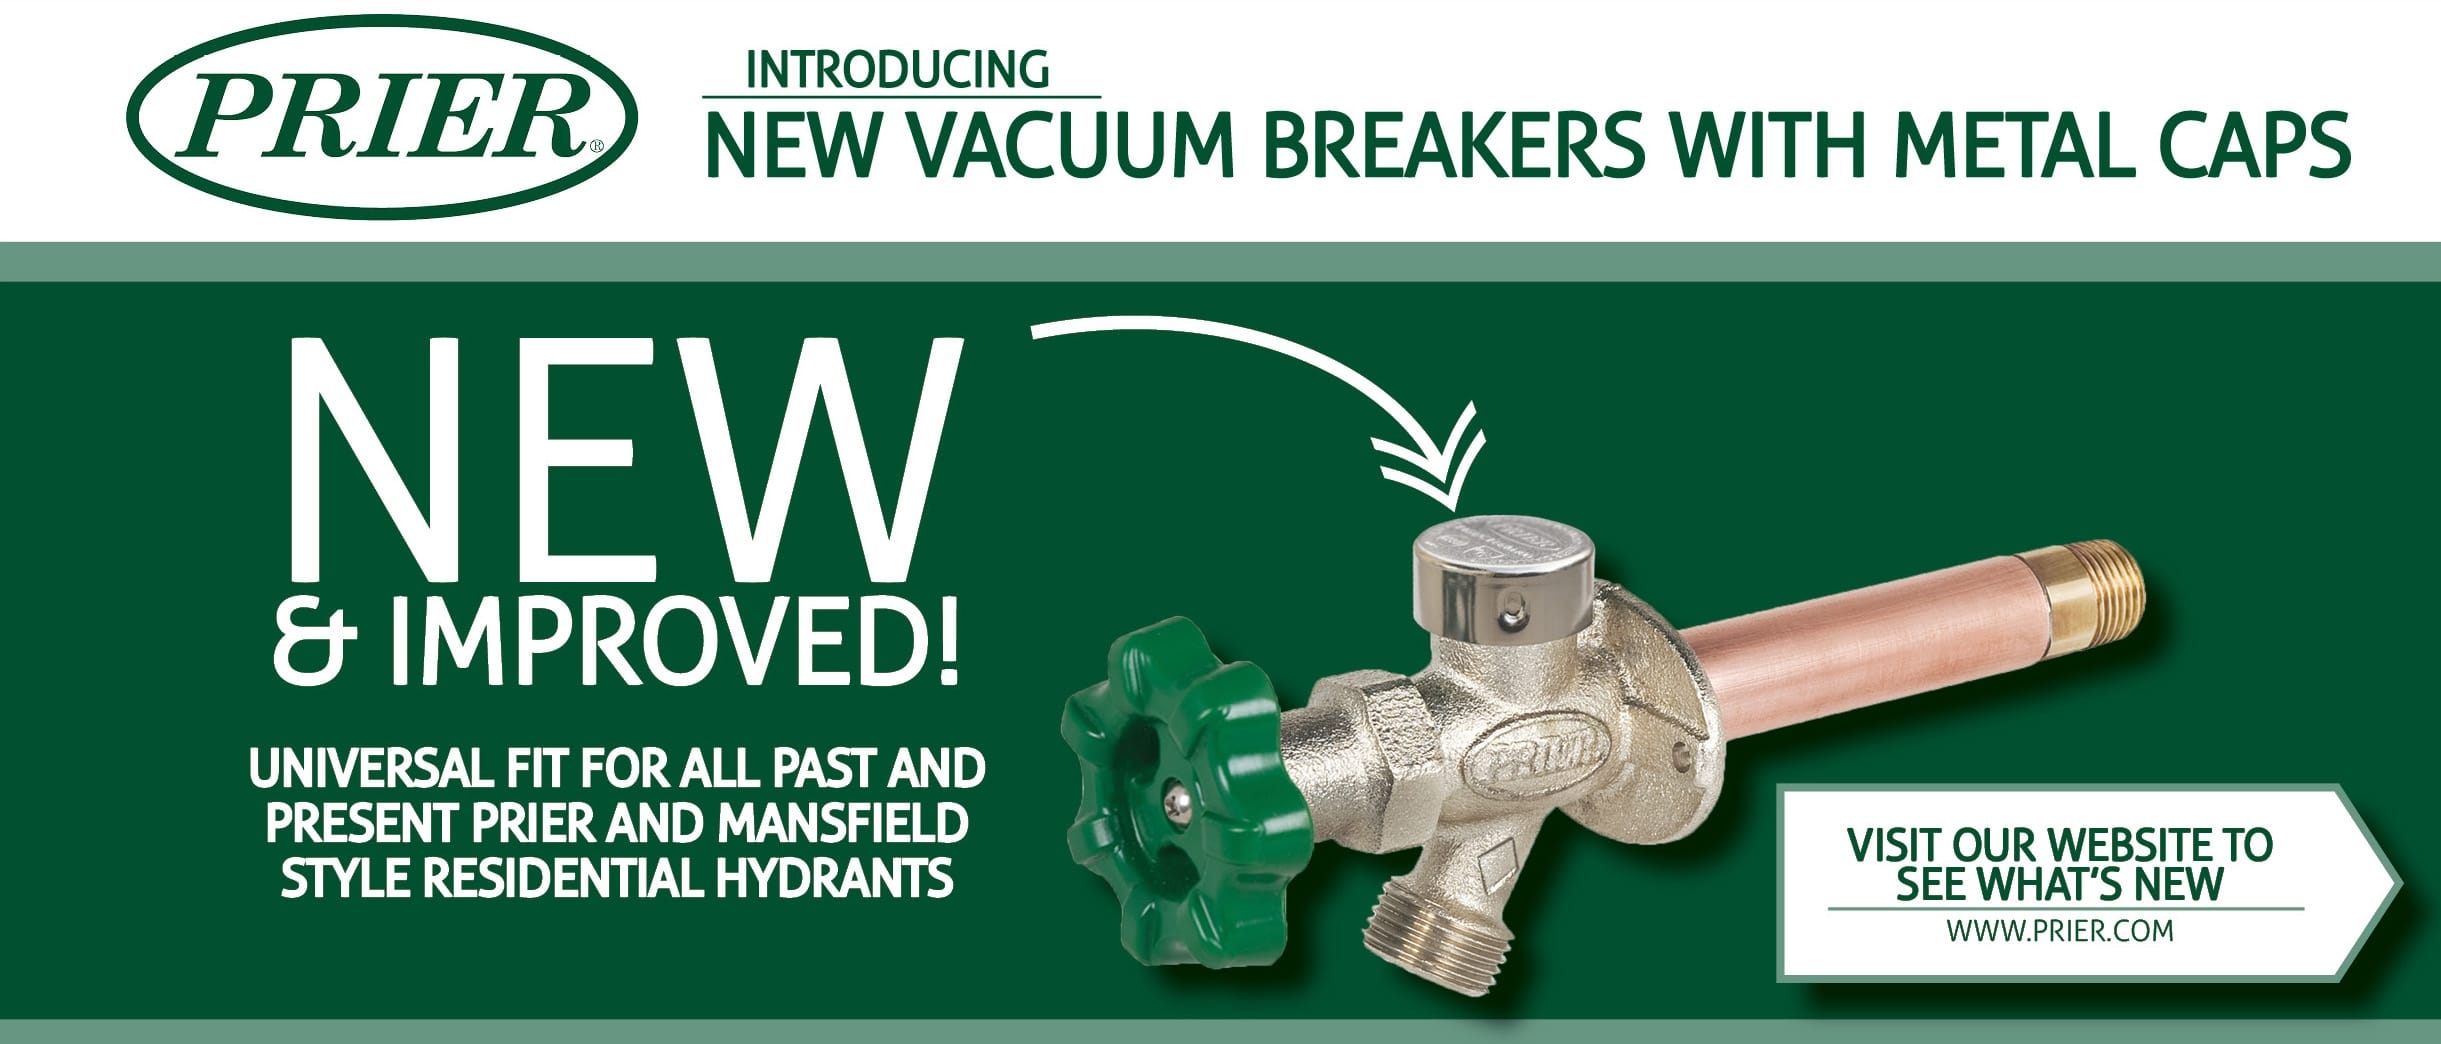 PRIER Introduces New Residential Vacuum Breakers